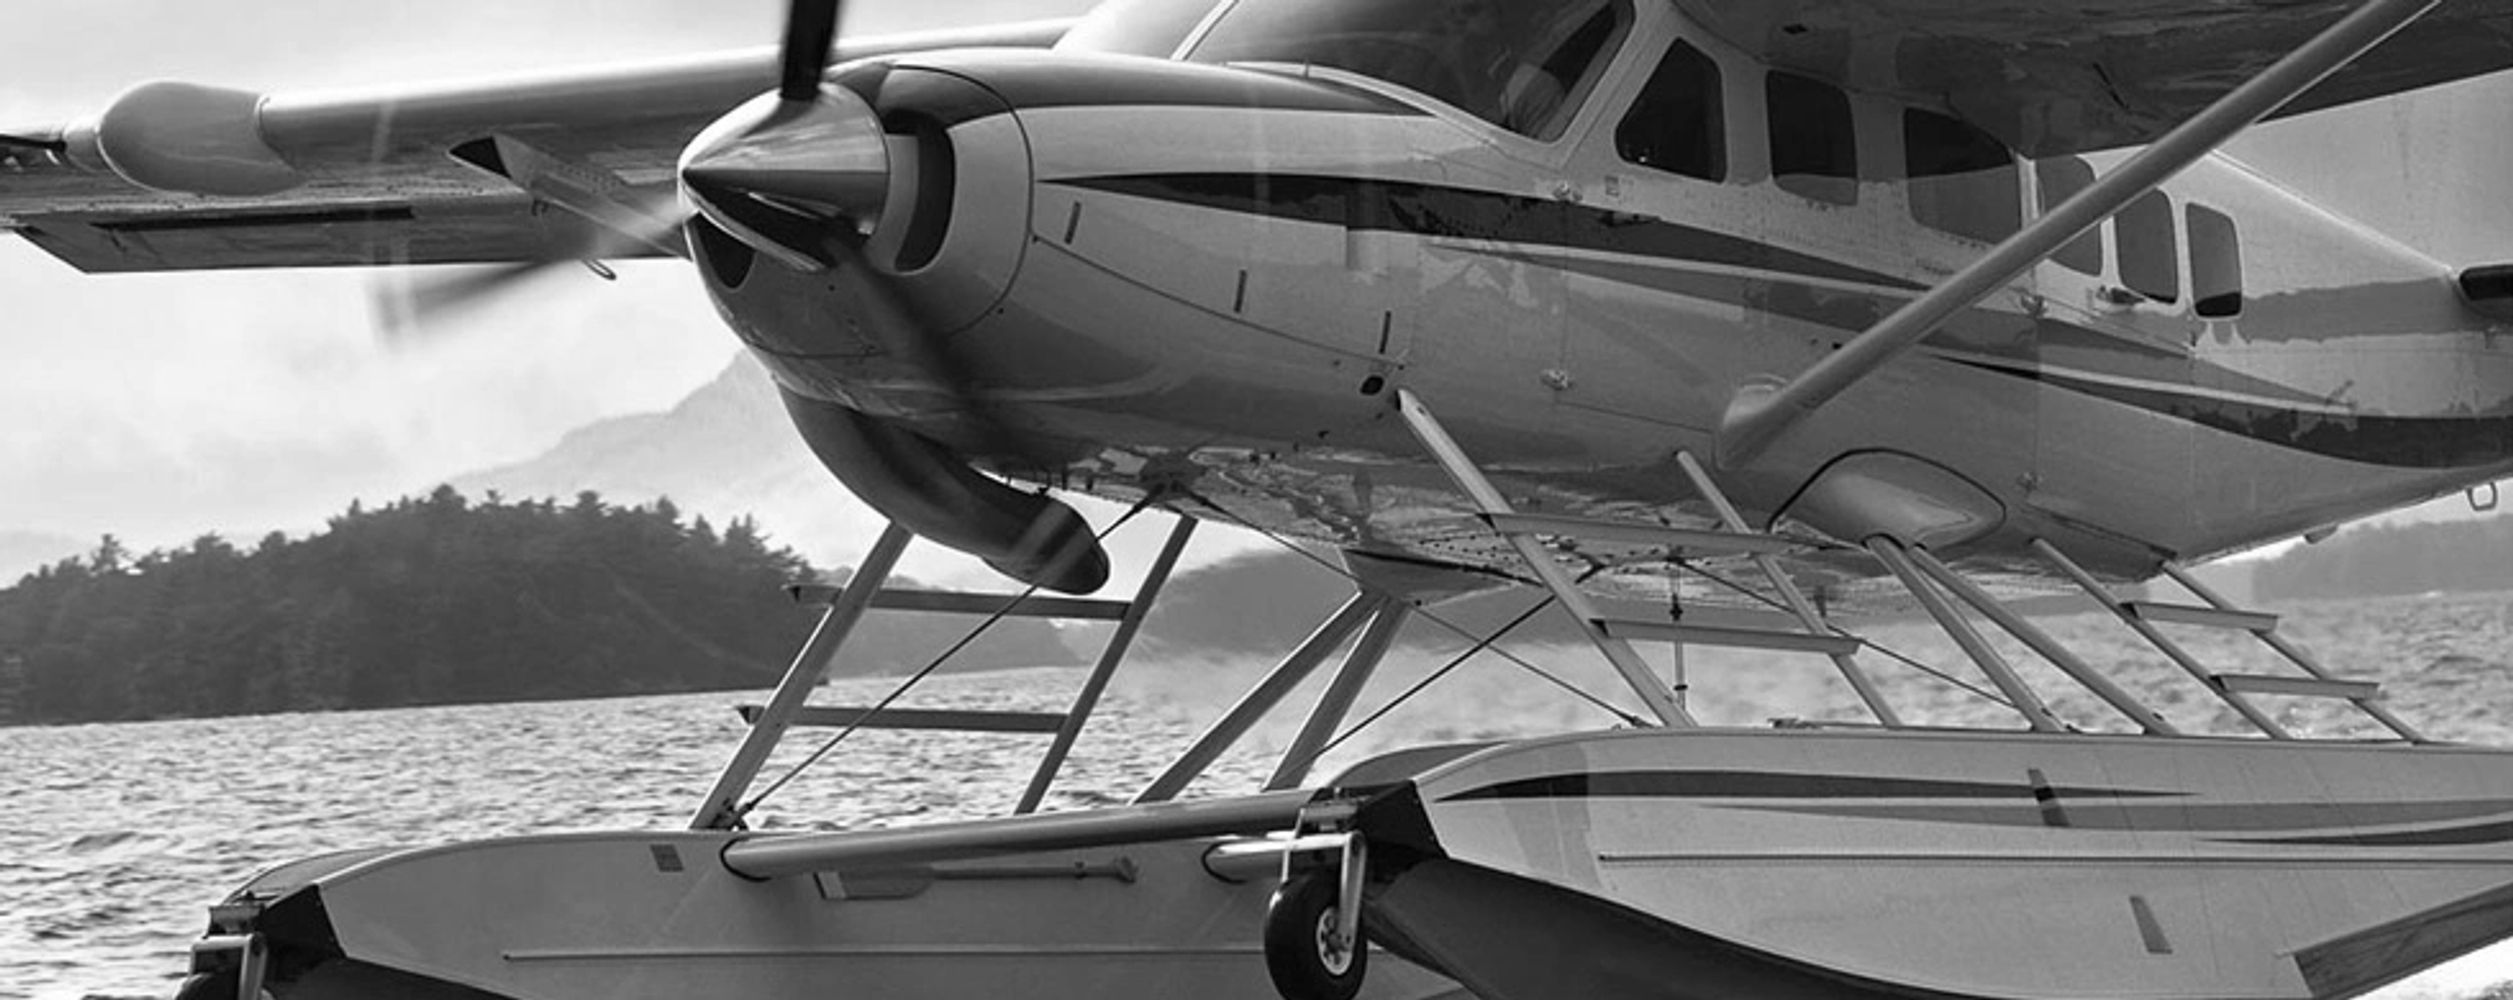 Alaska aircraft airplane sales parts maintenance Cessna caravan fleet service recreation commercial